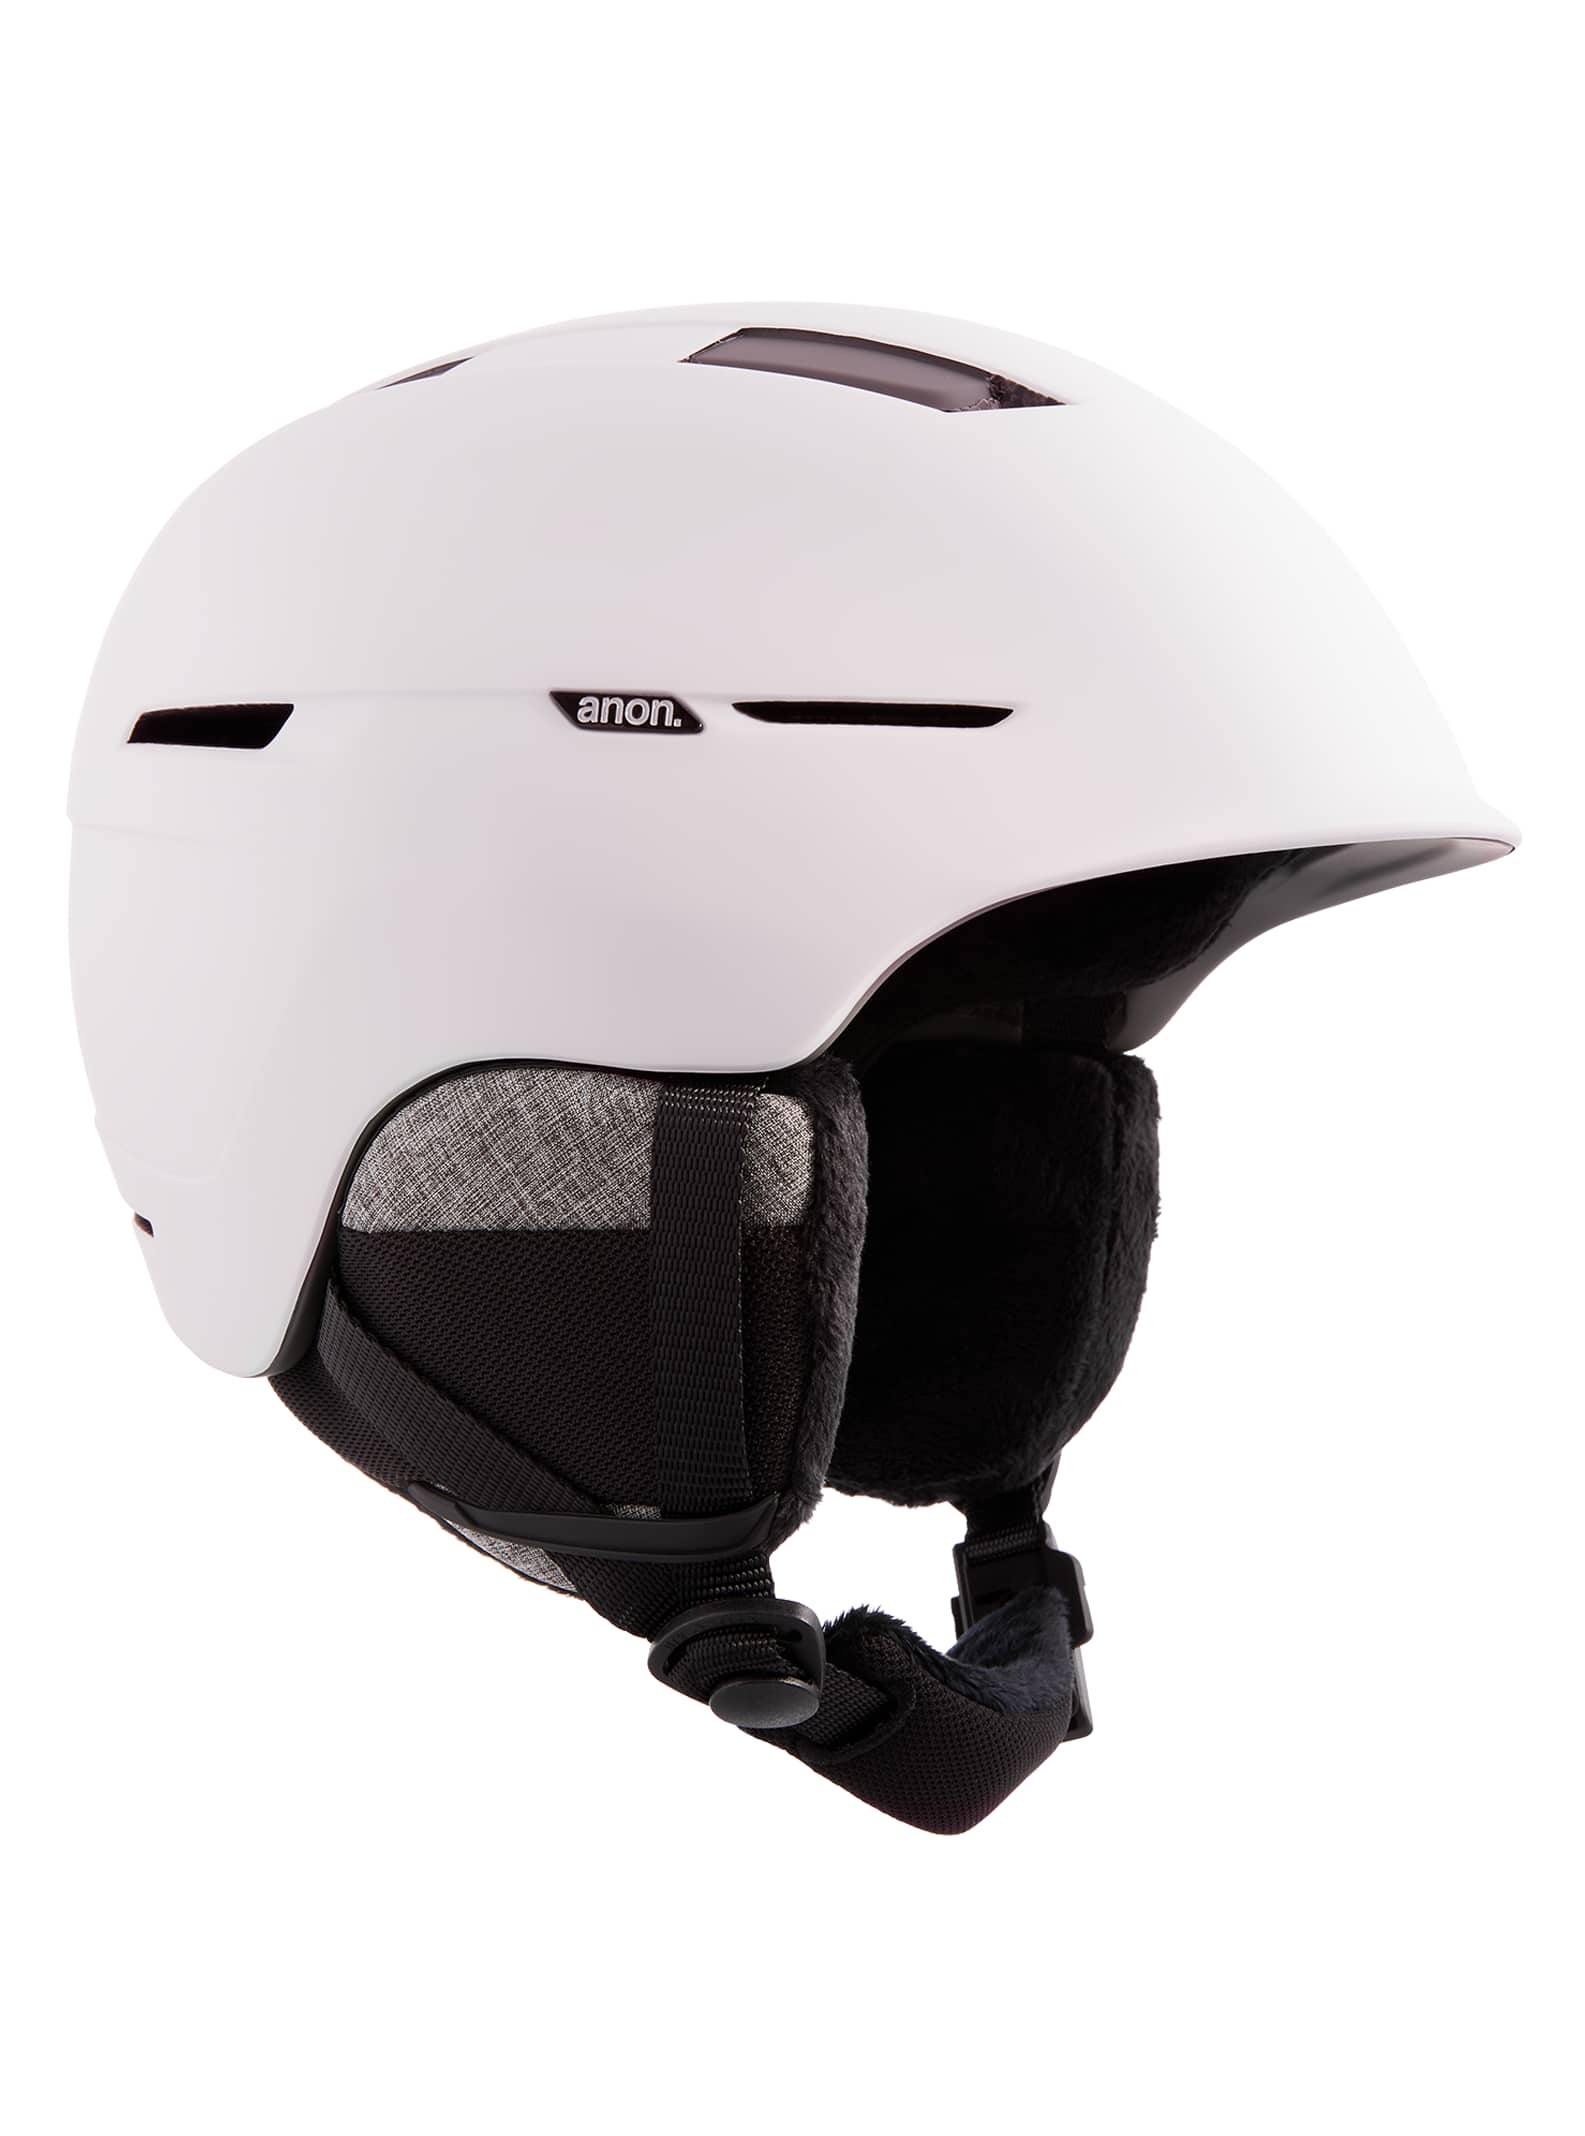 Anon Auburn MIPS® Helmet | Burton.com Winter 2022 US